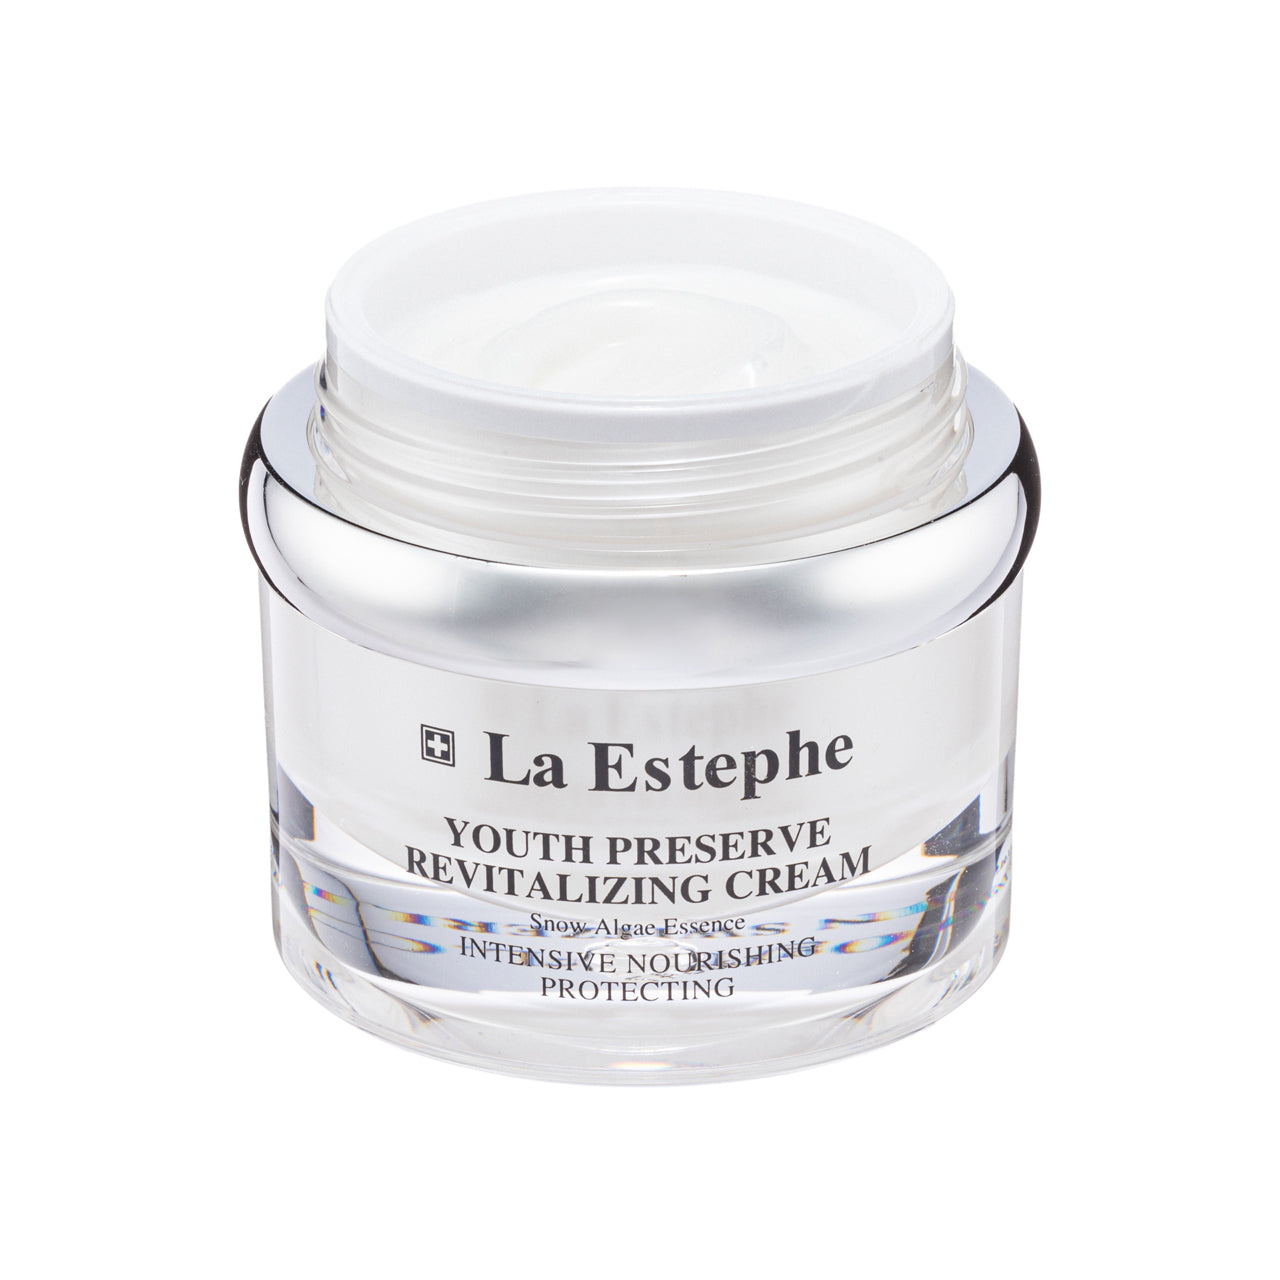 La Estephe Youth Preserve Revitalizing Cream 50G